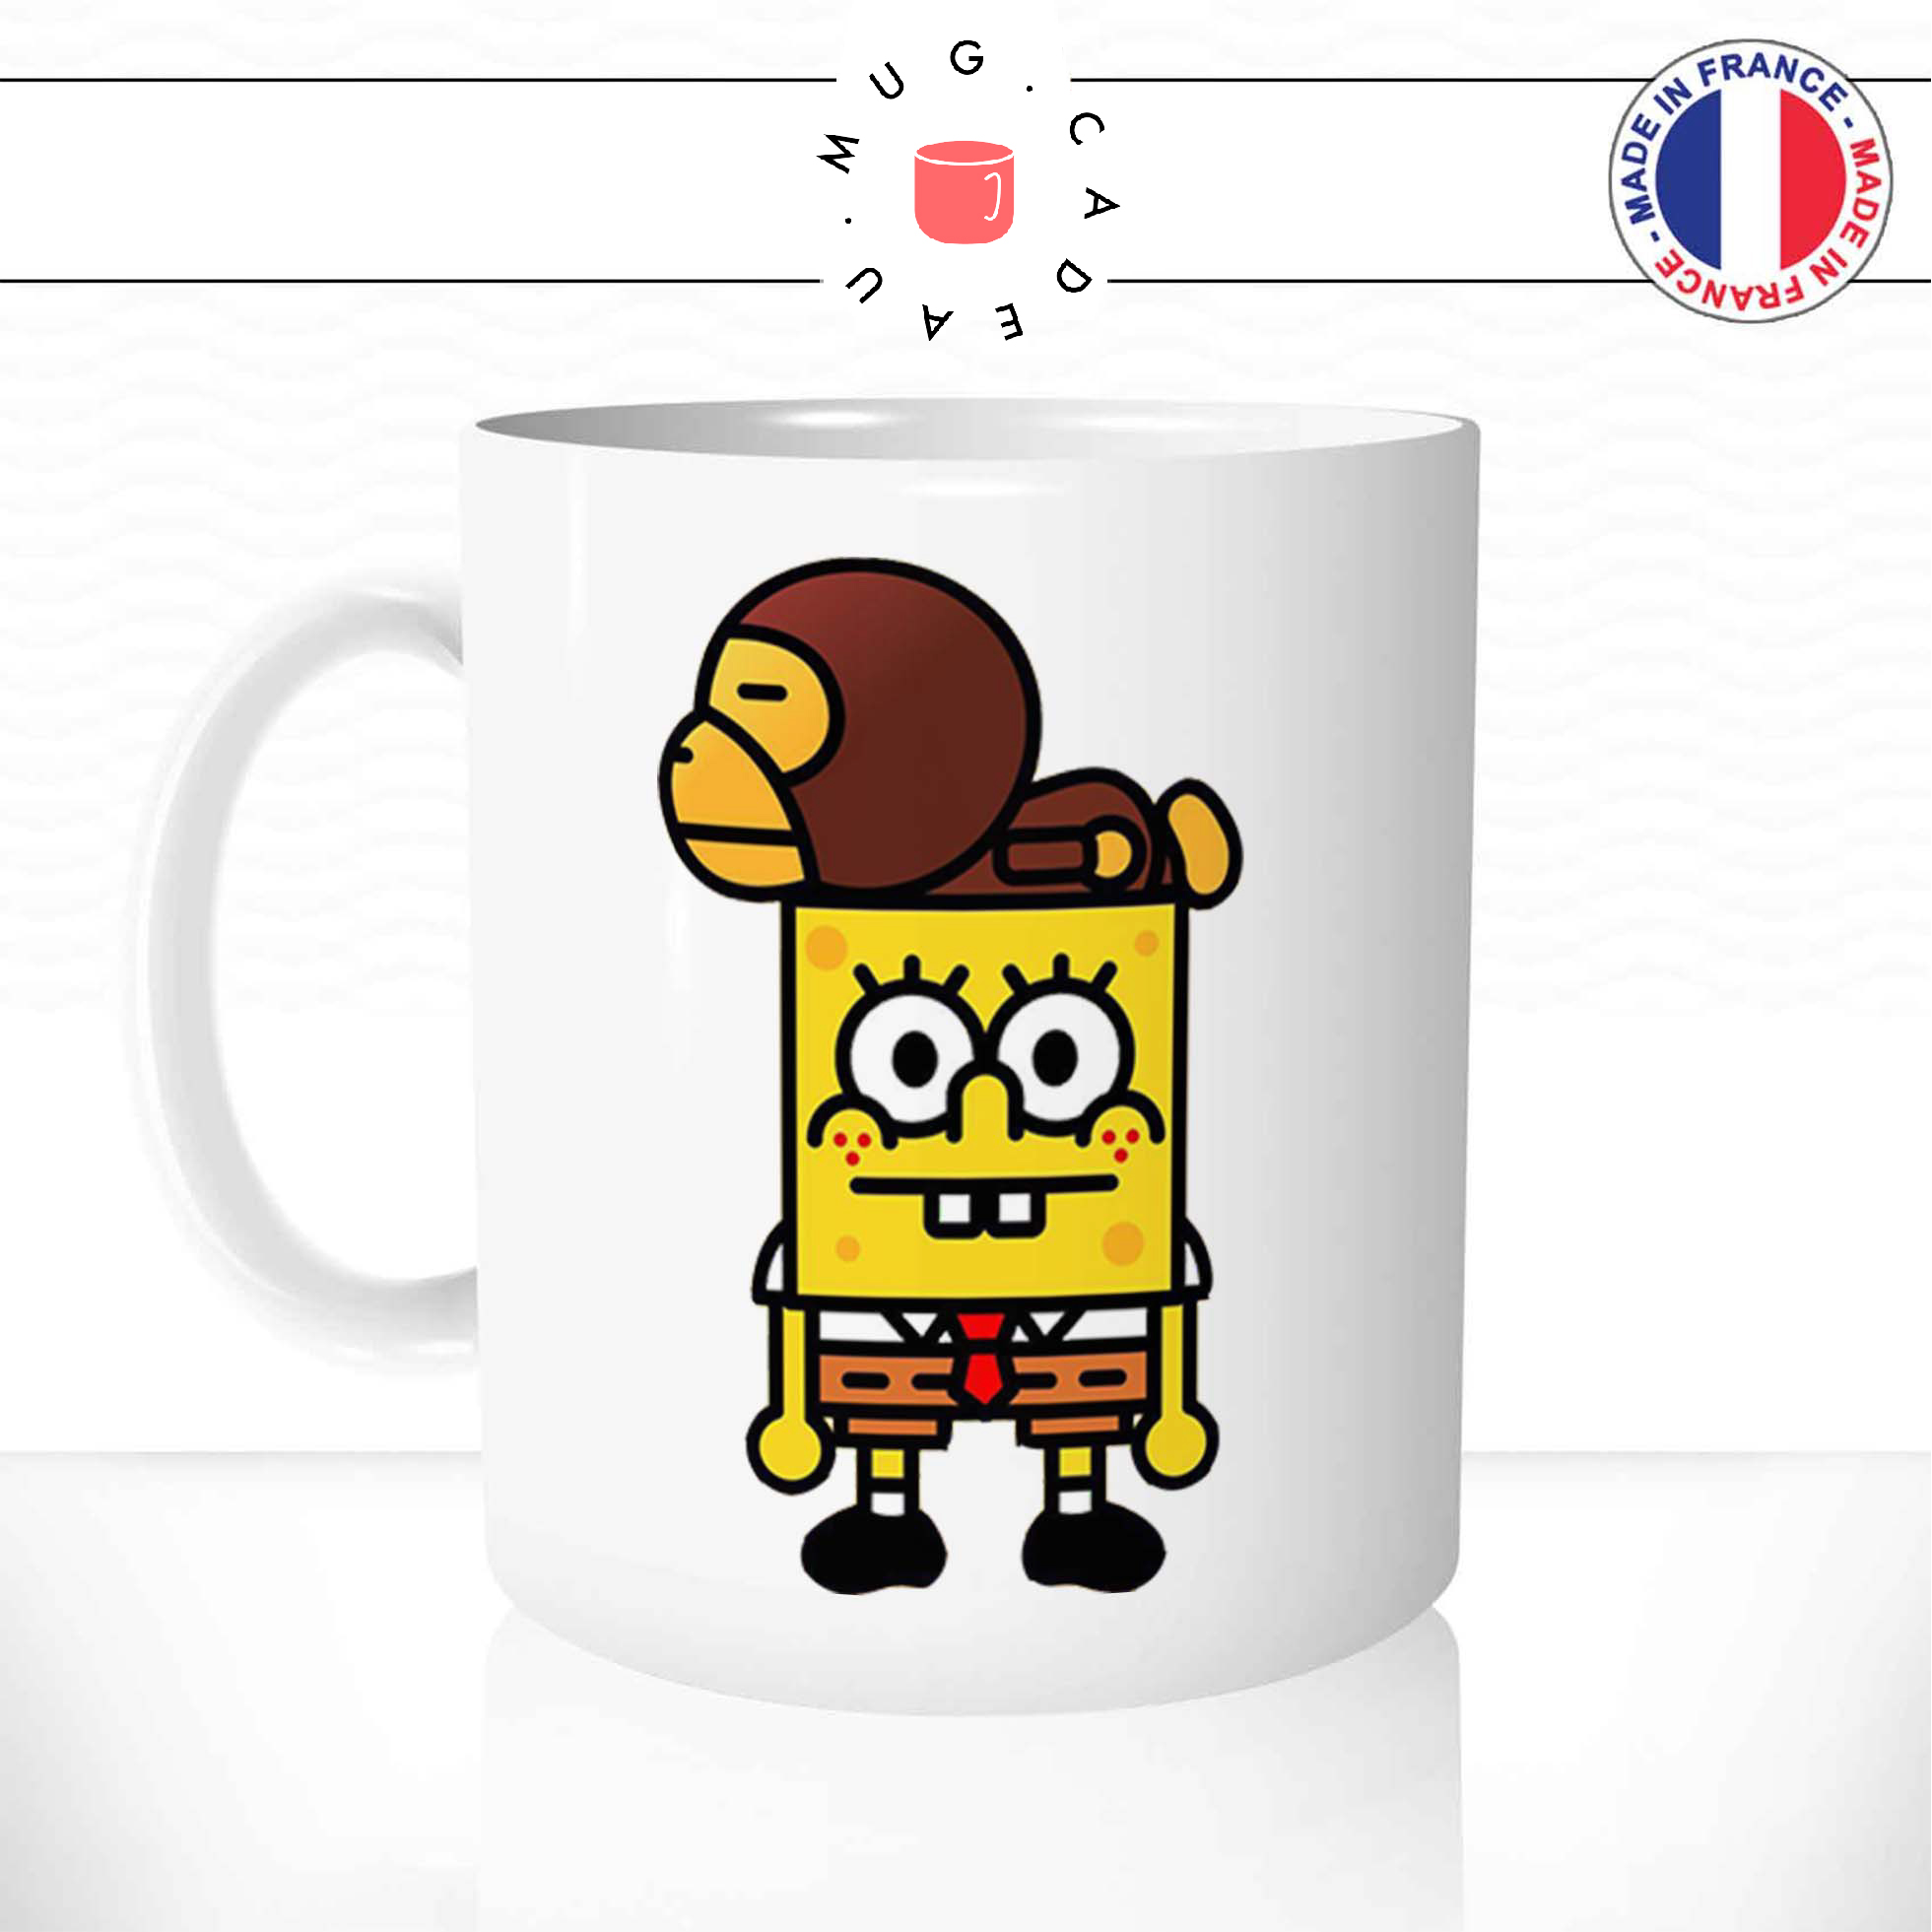 mug-tasse-ref4-dessin-anime-cartoon-bob-eponge-singe-monkey-cafe-the-mugs-tasses-personnalise-anse-gauche